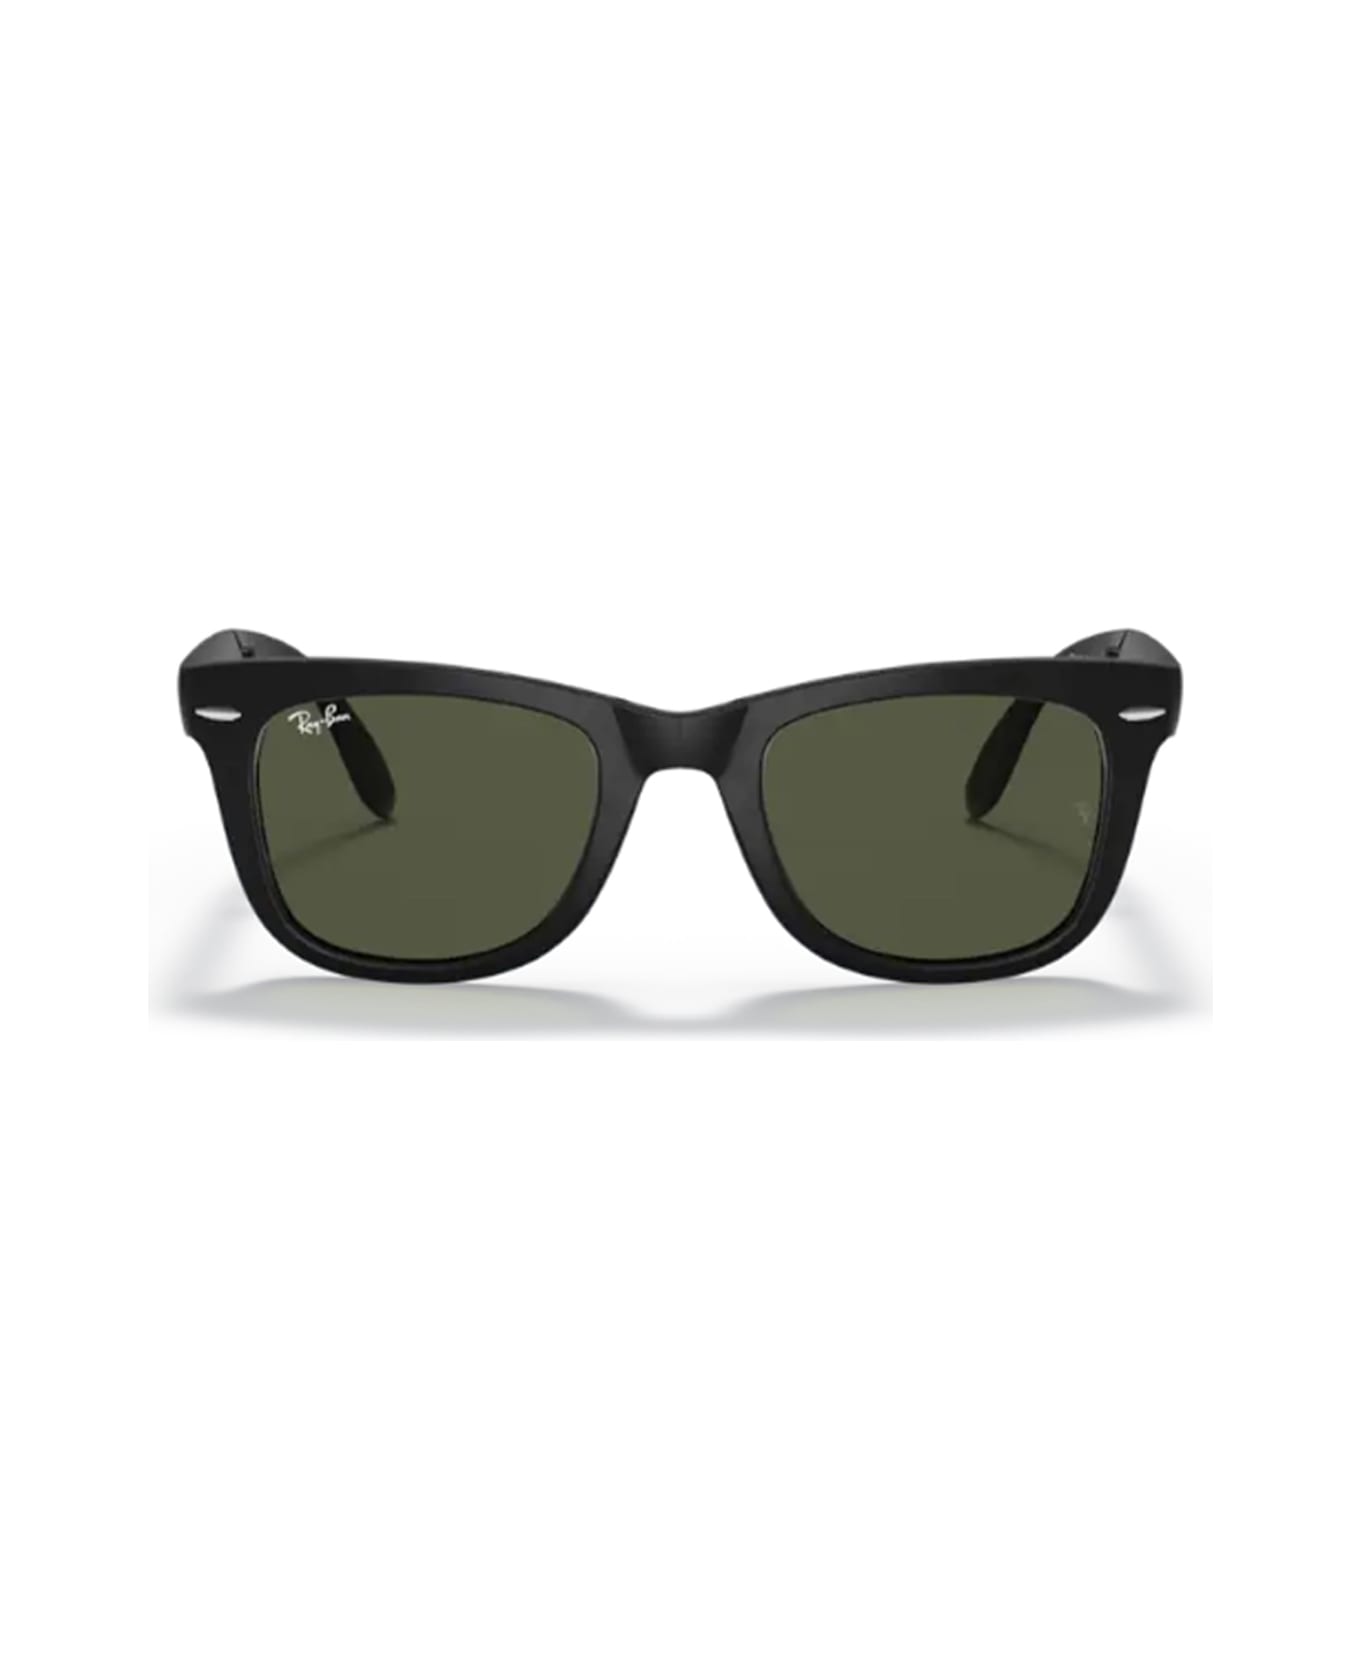 Ray-Ban Folding Wayfarer Rb4105 Sunglasses - Nero